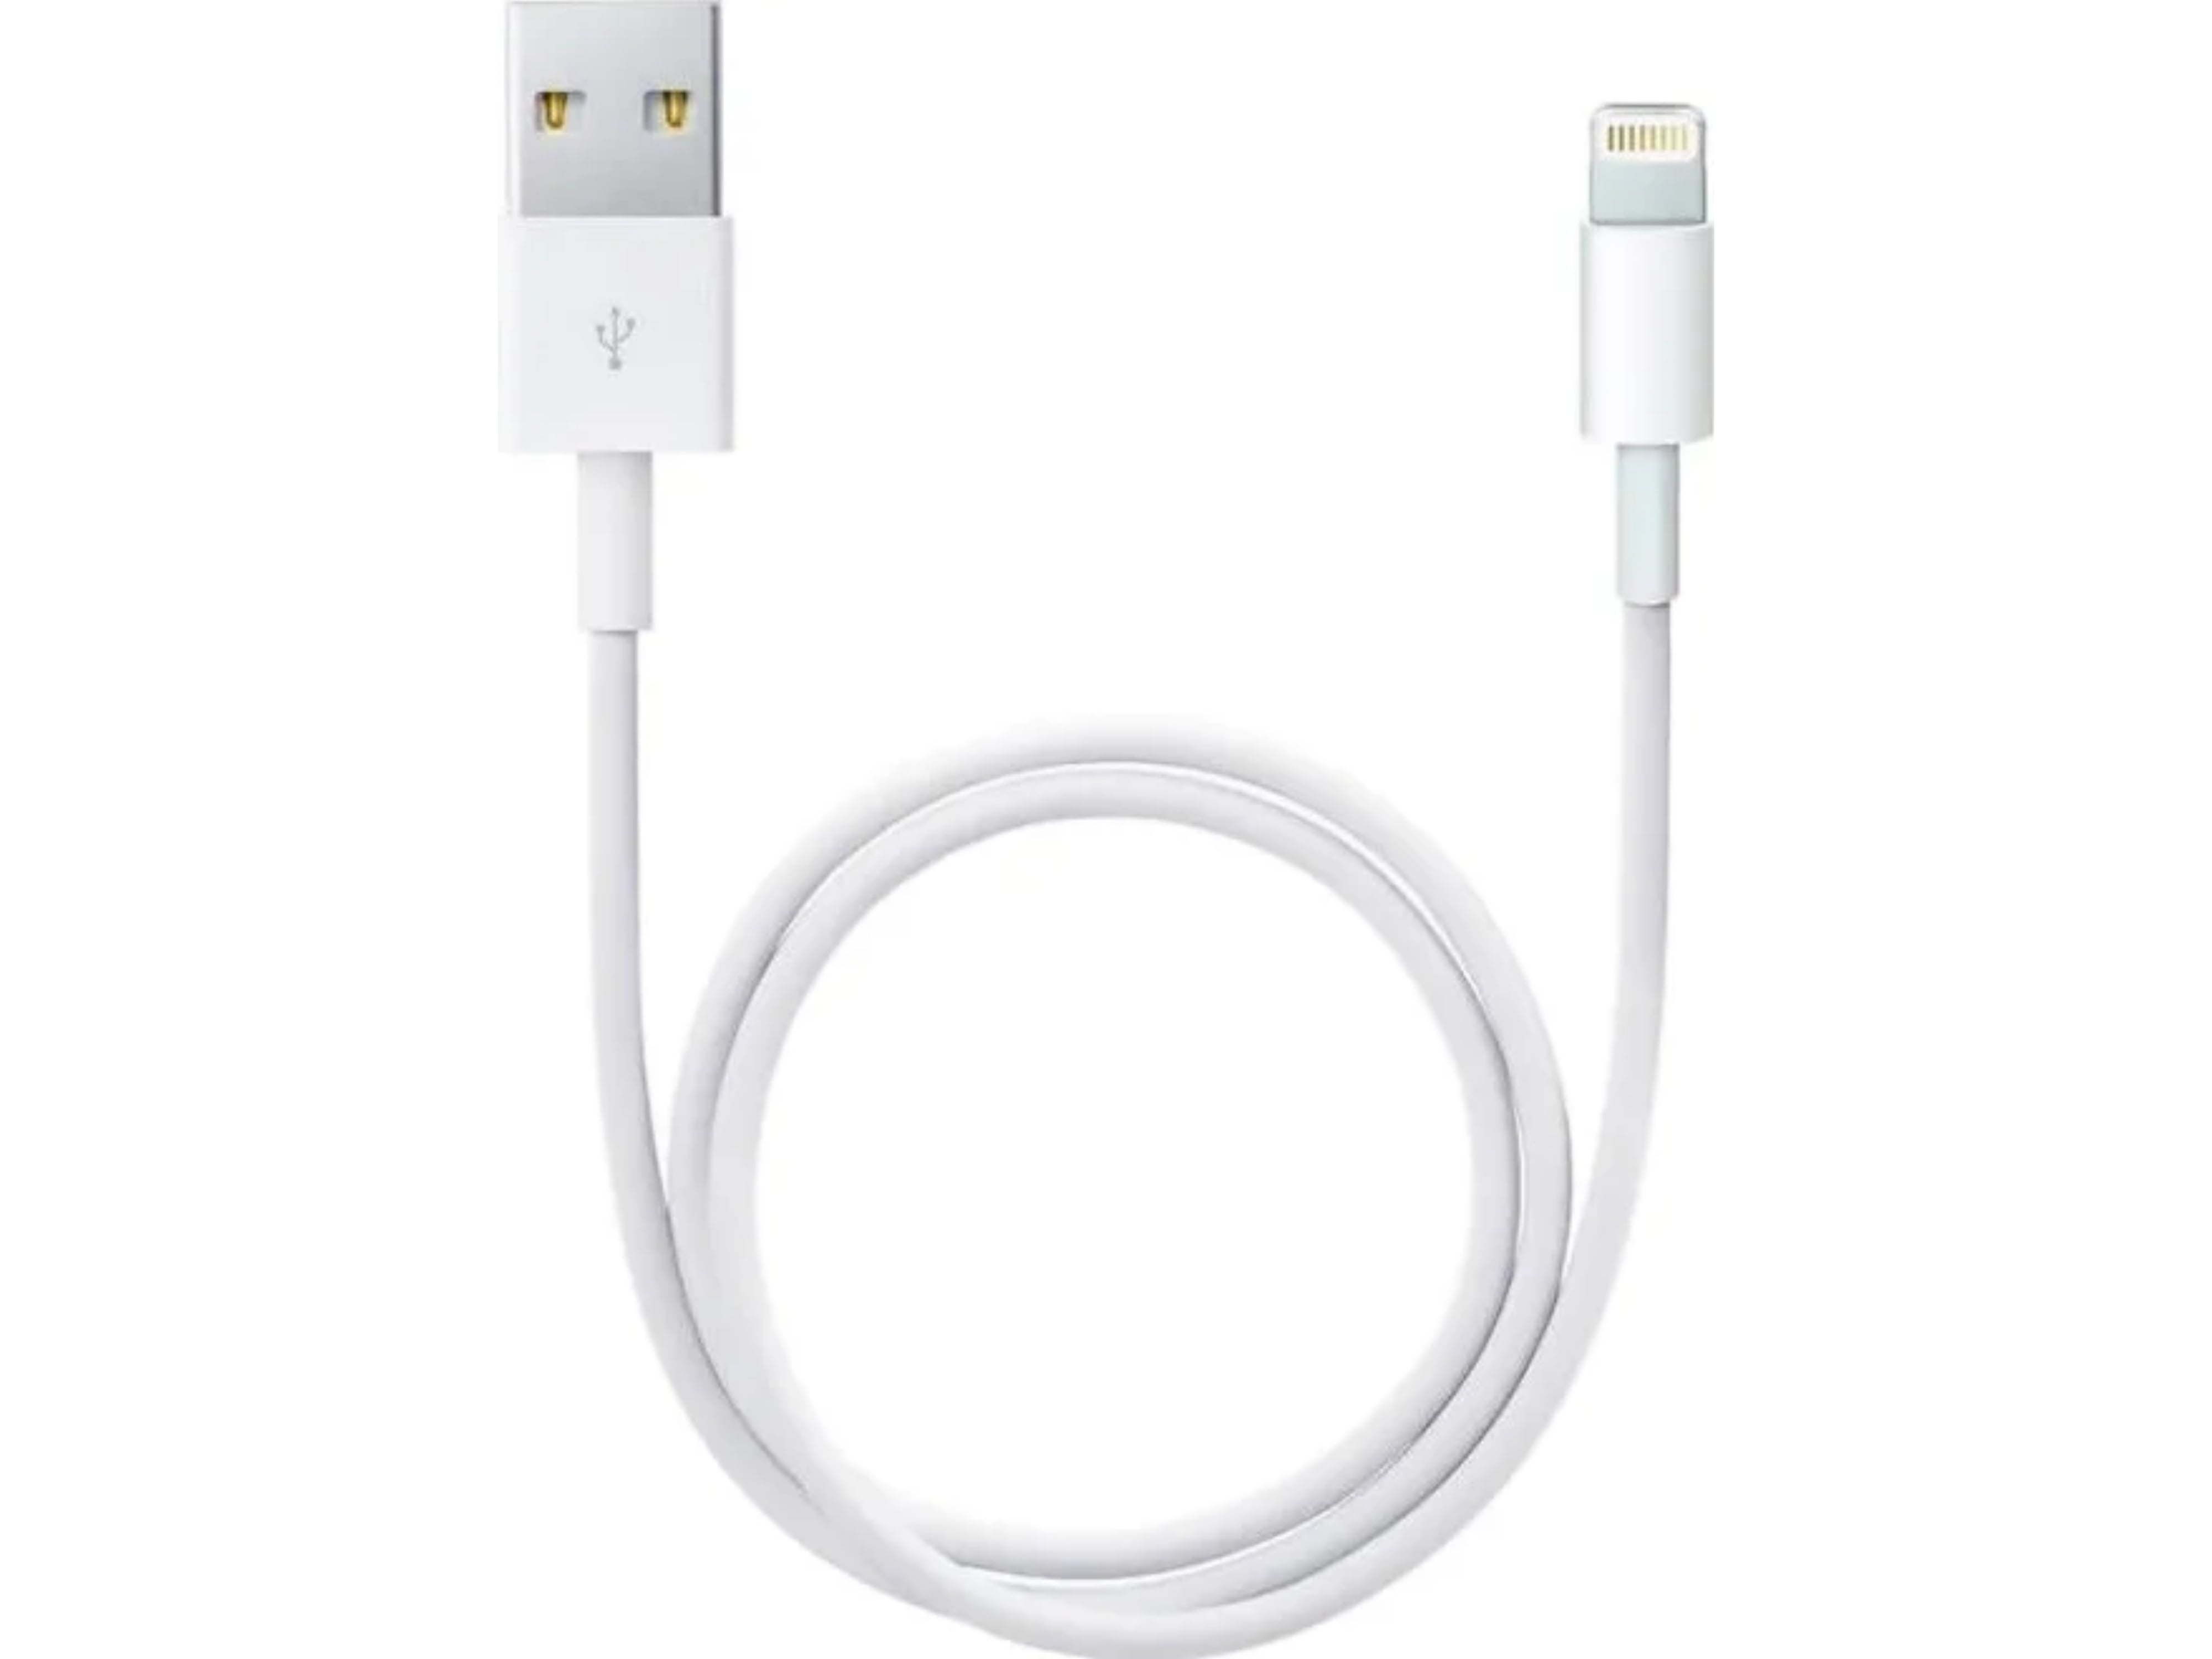 Usb apple iphone. Кабель Samsung Ep-da705bwrgru. Кабель Apple Lightning to USB Cable (md818zm/a). Кабель Apple USB Lightning 1m mque2zm/a. Кабель Apple USB - Lightning (me291zm/a) 0.5 м.